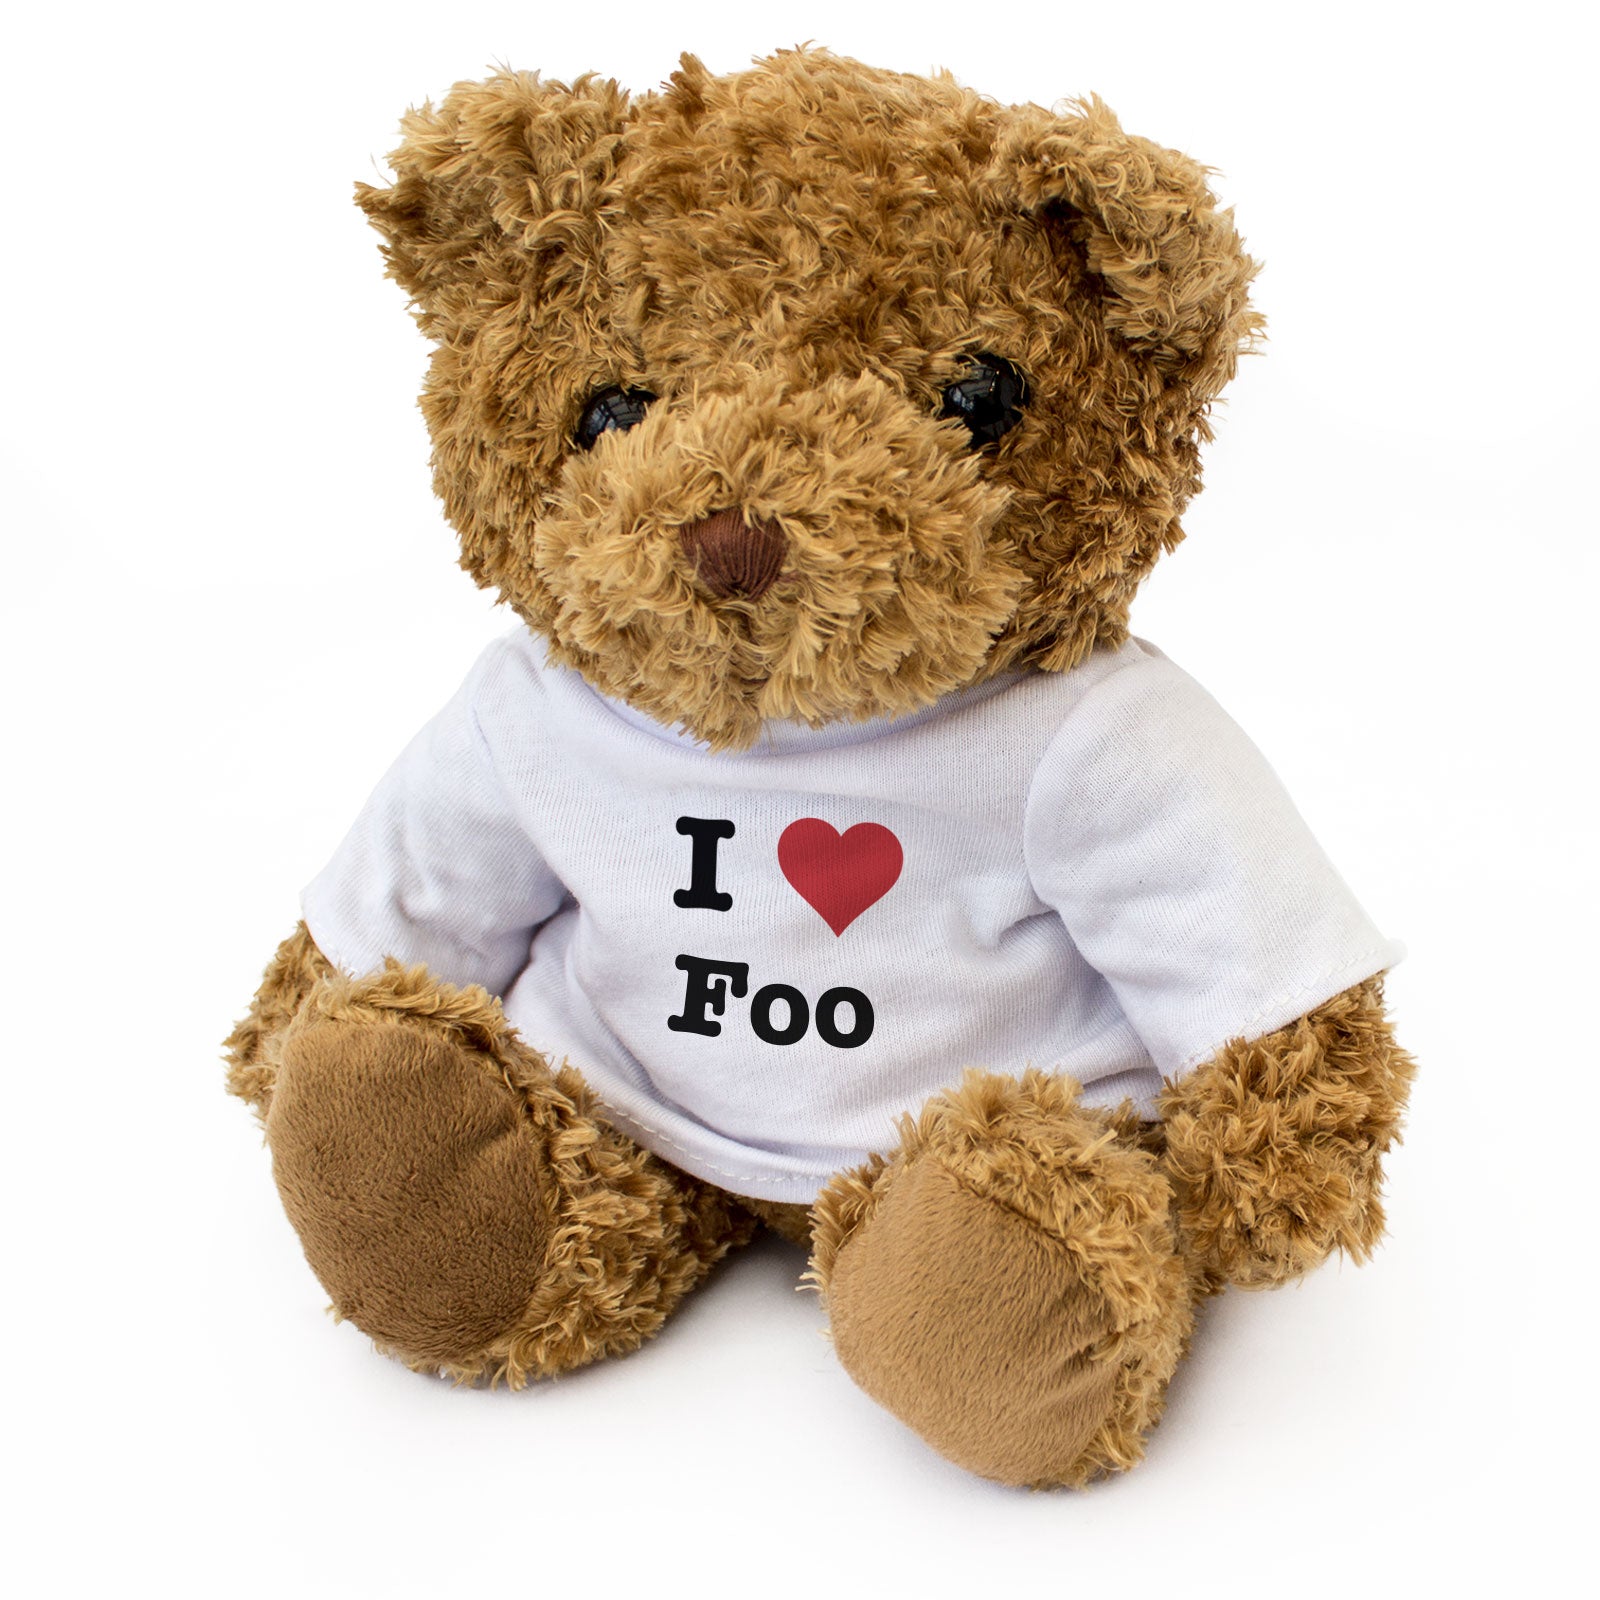 I Love Foo - Teddy Bear